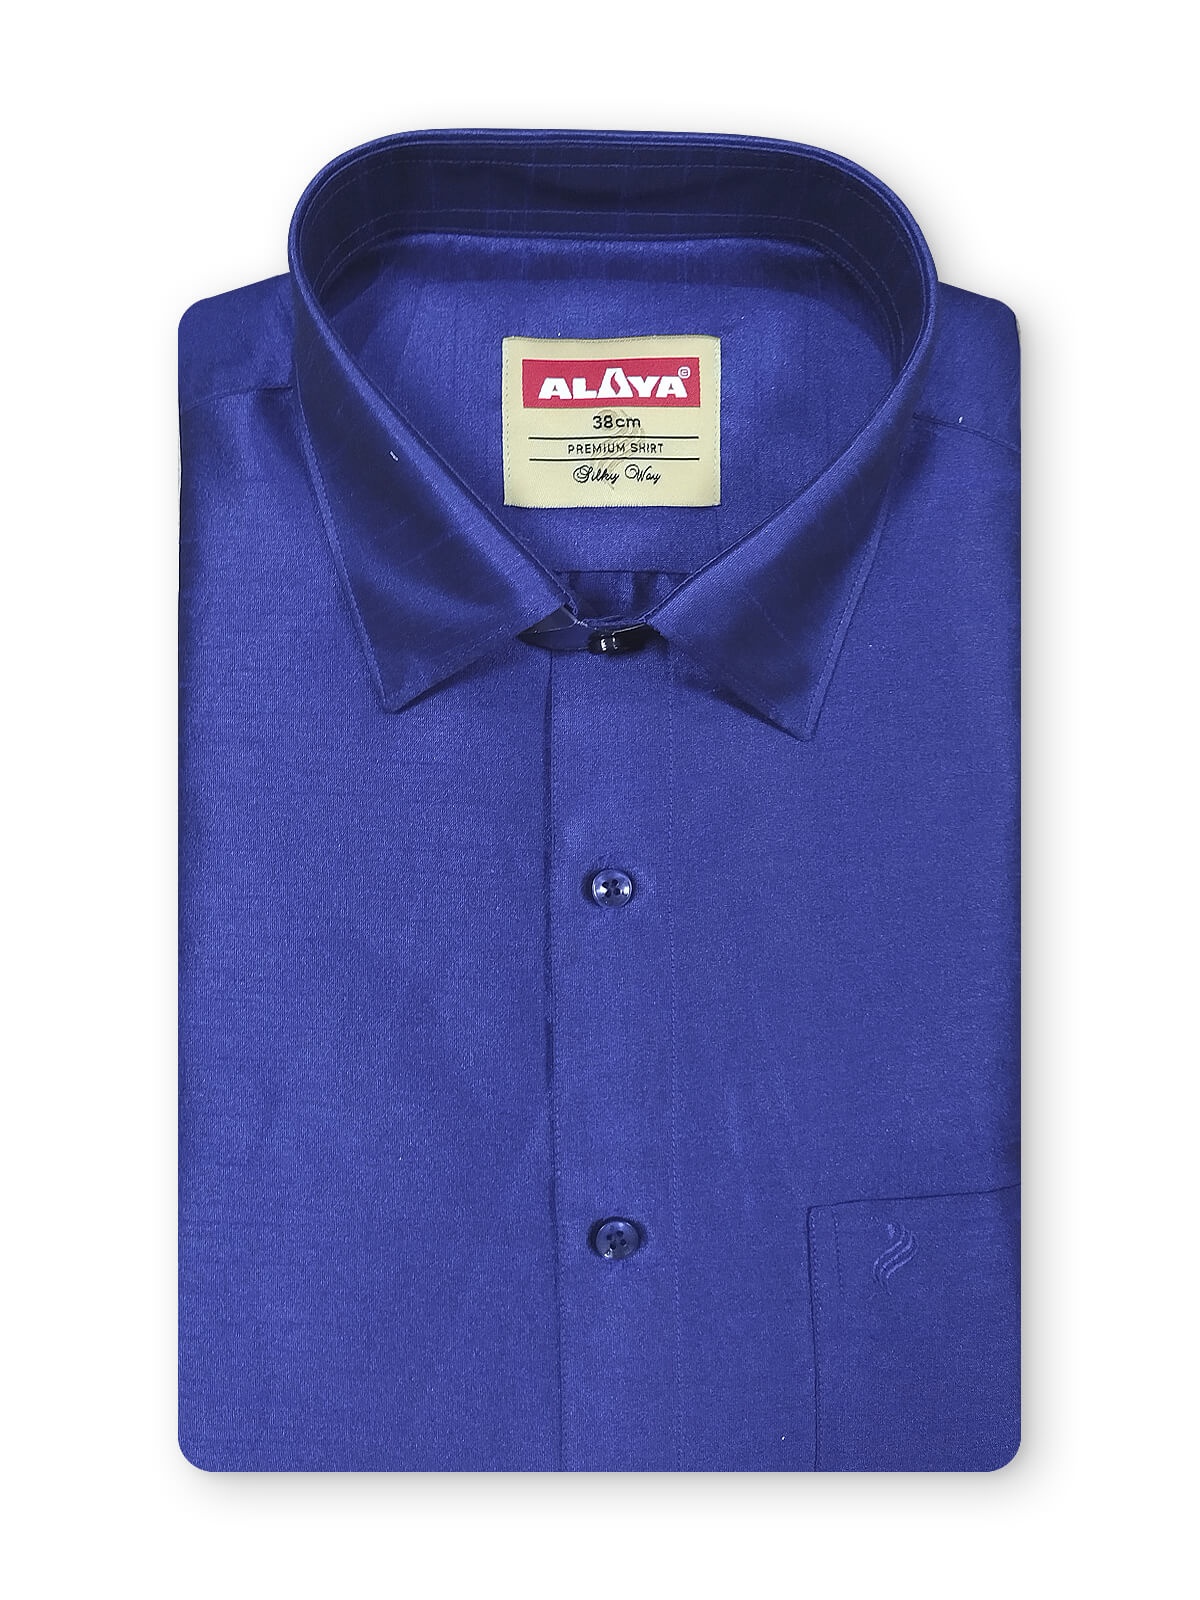 Silky Way Shirt for Men - Regular Fit - Royal Blue